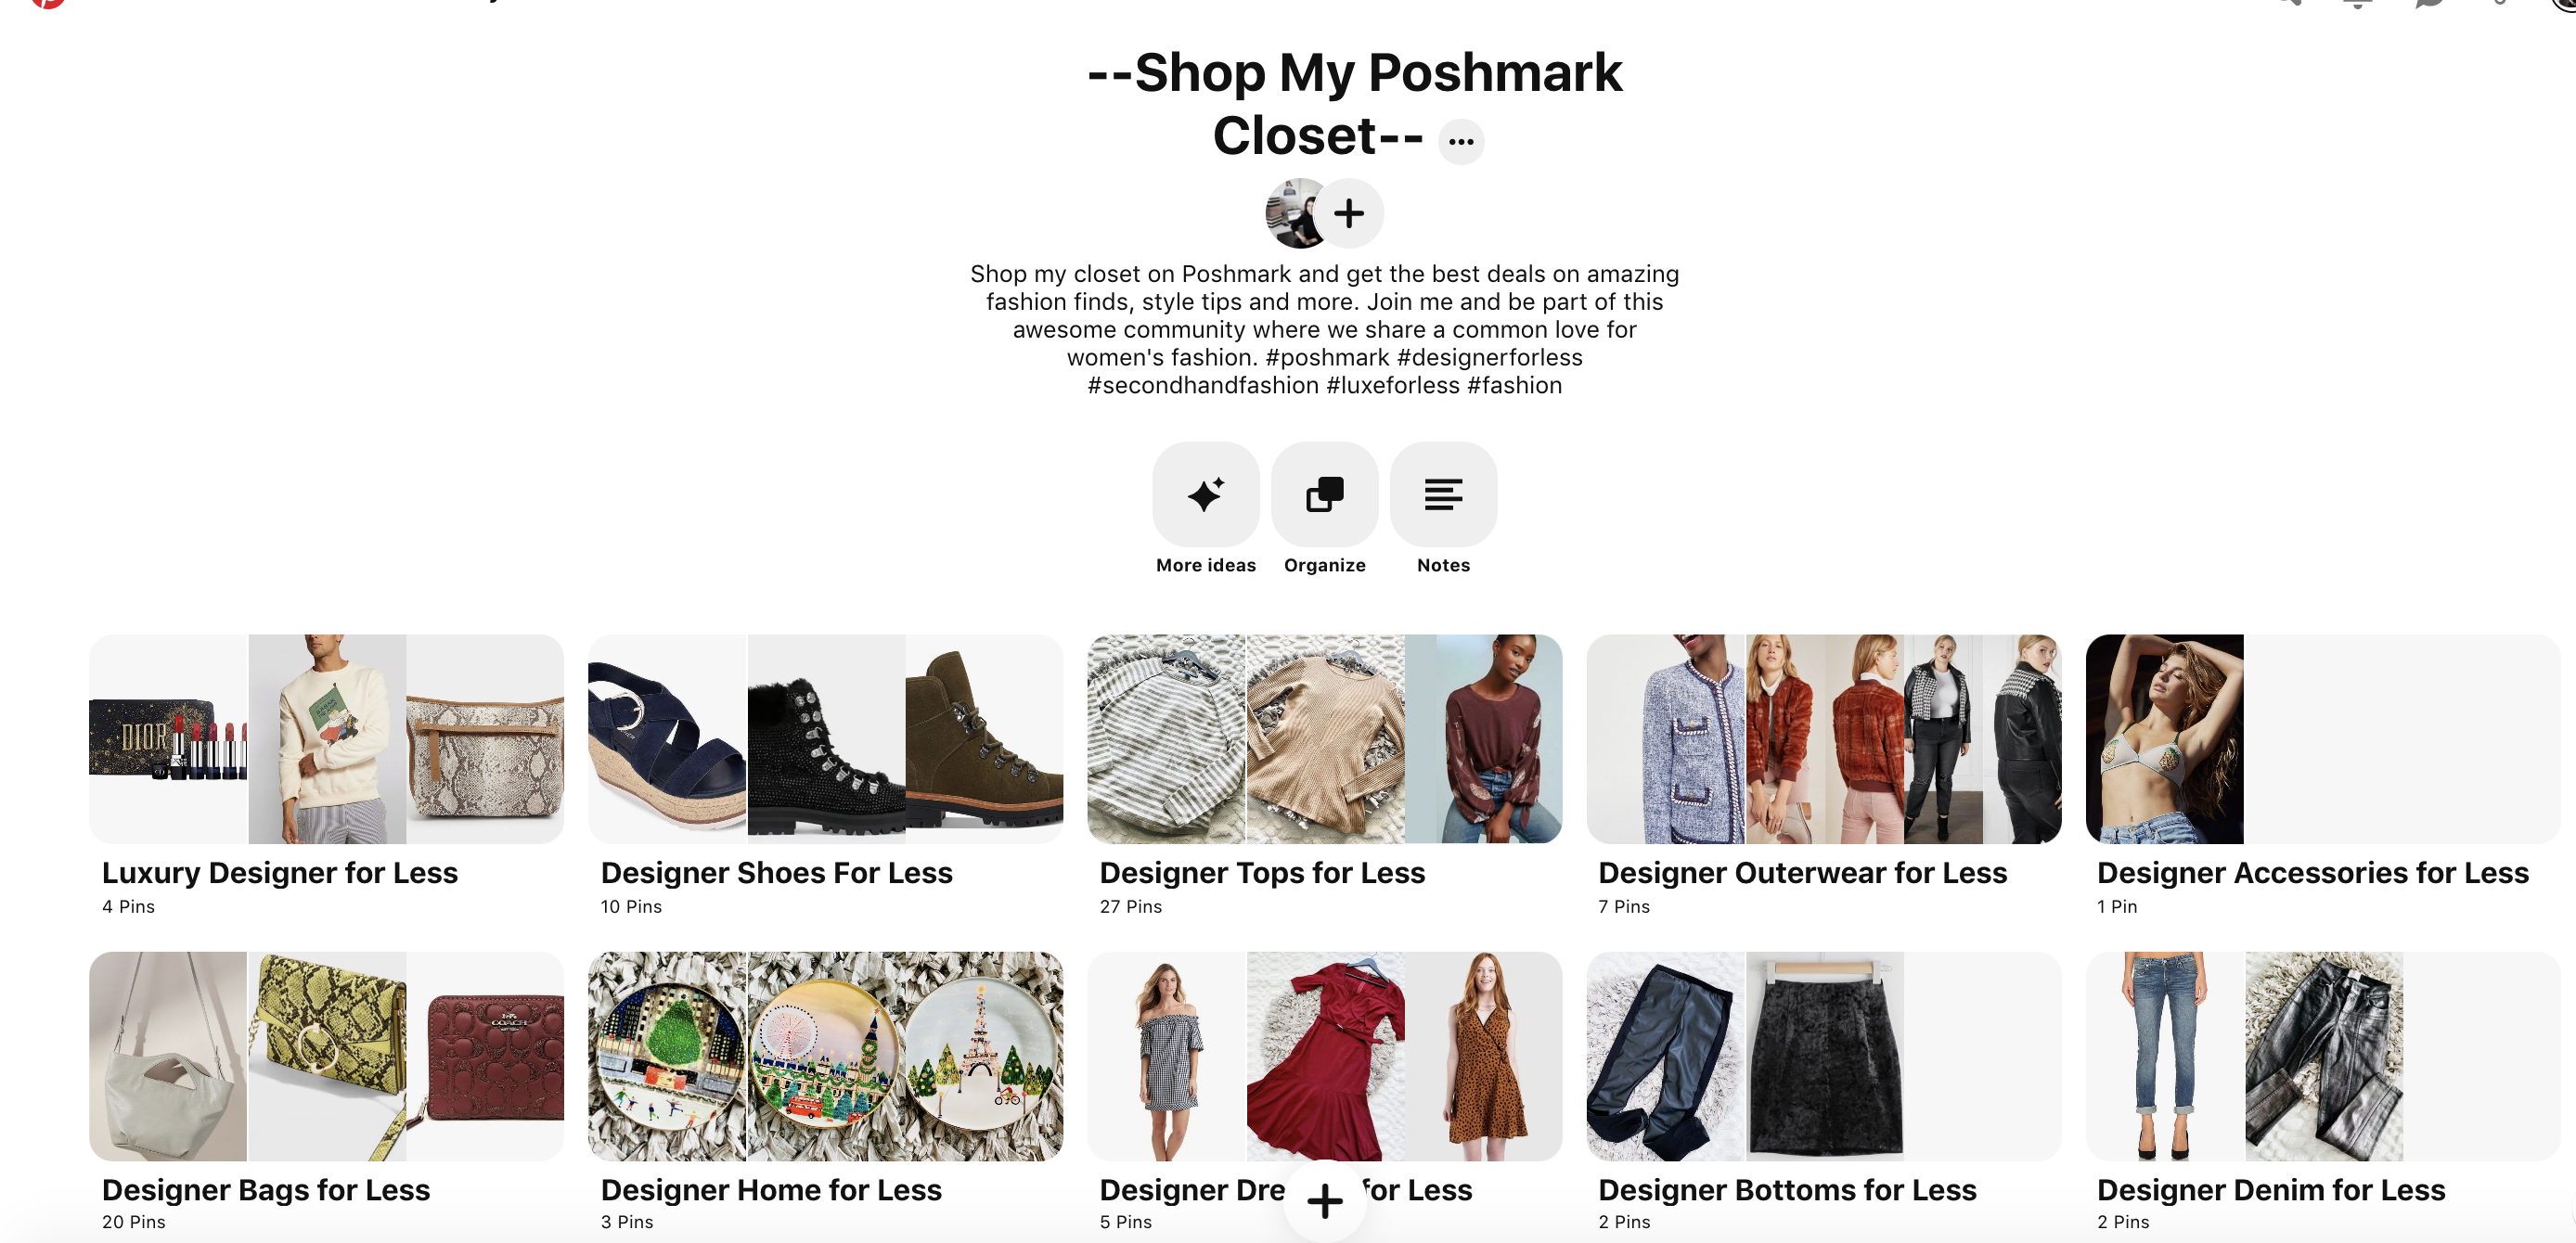 How to Utilize Pinterest to Make More Poshmark Sales